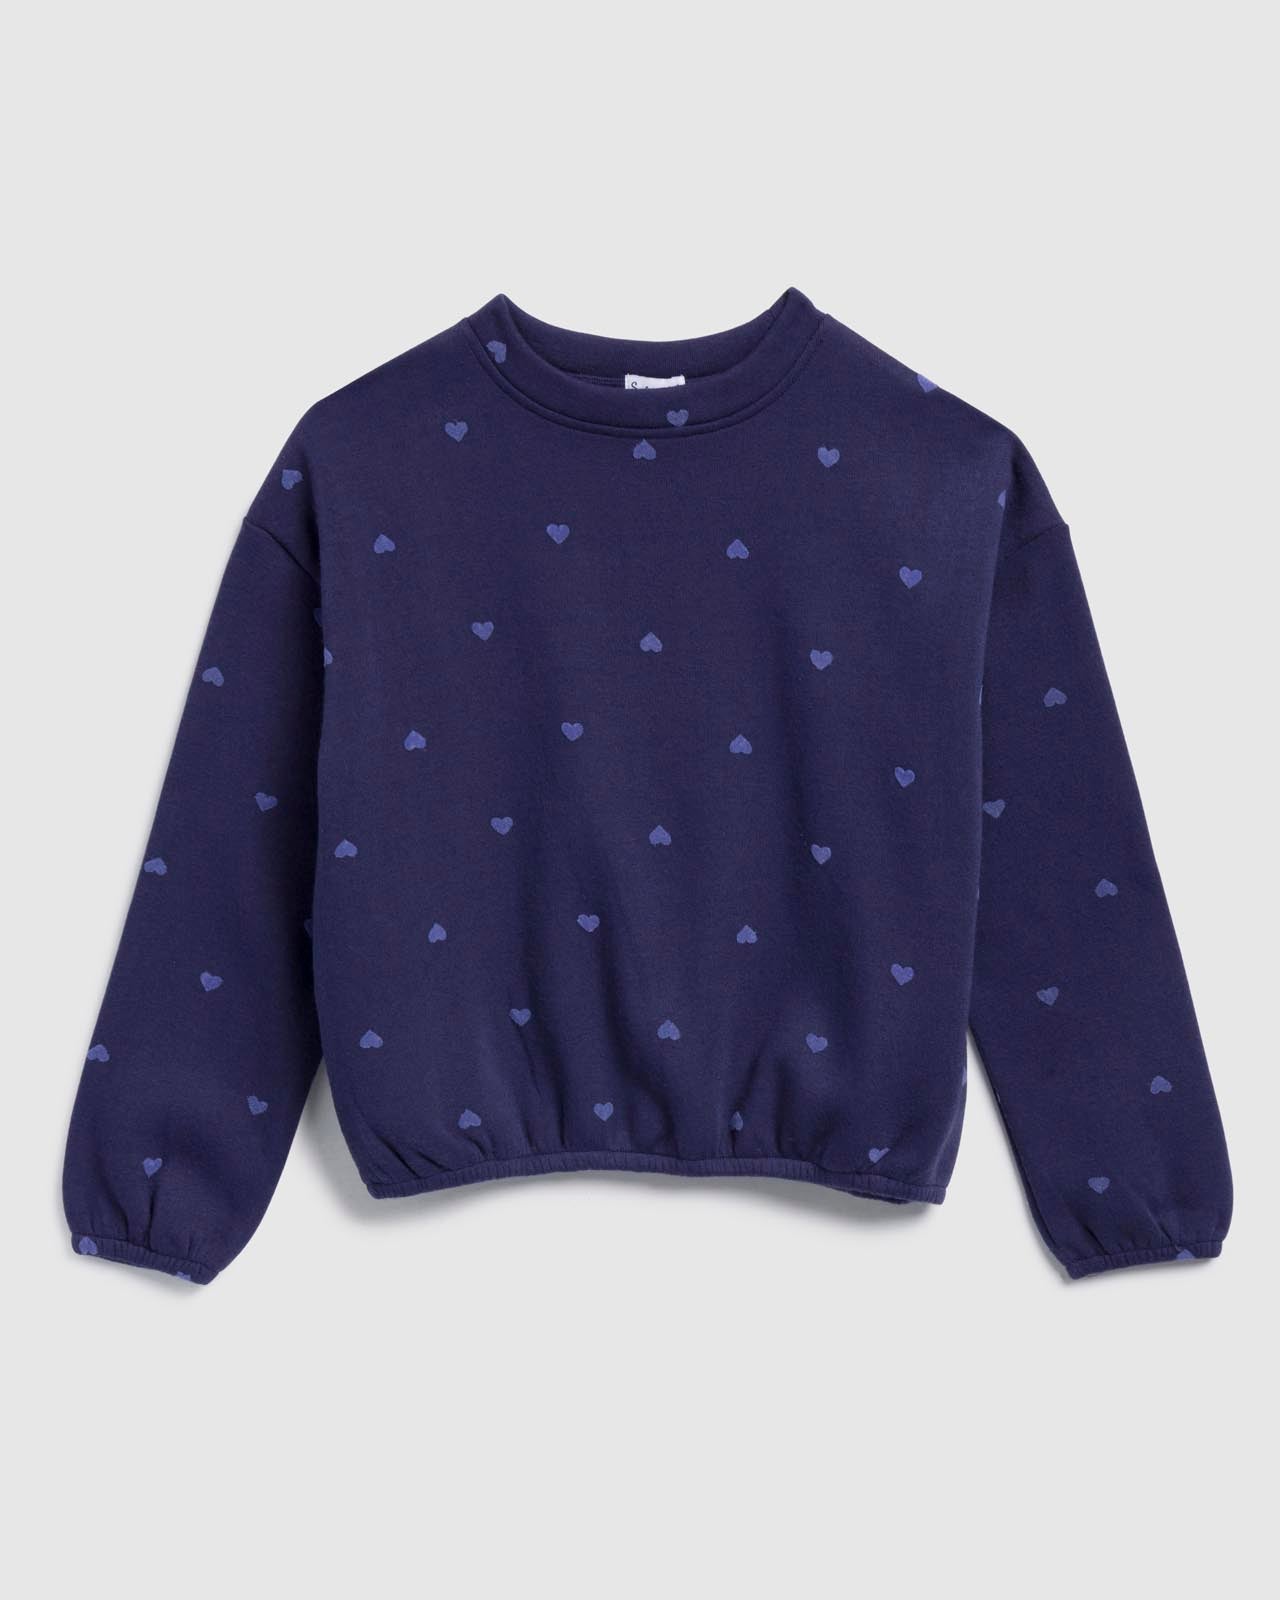 Splendid Girls' Supersoft Glitter Star Print Sweatshirt